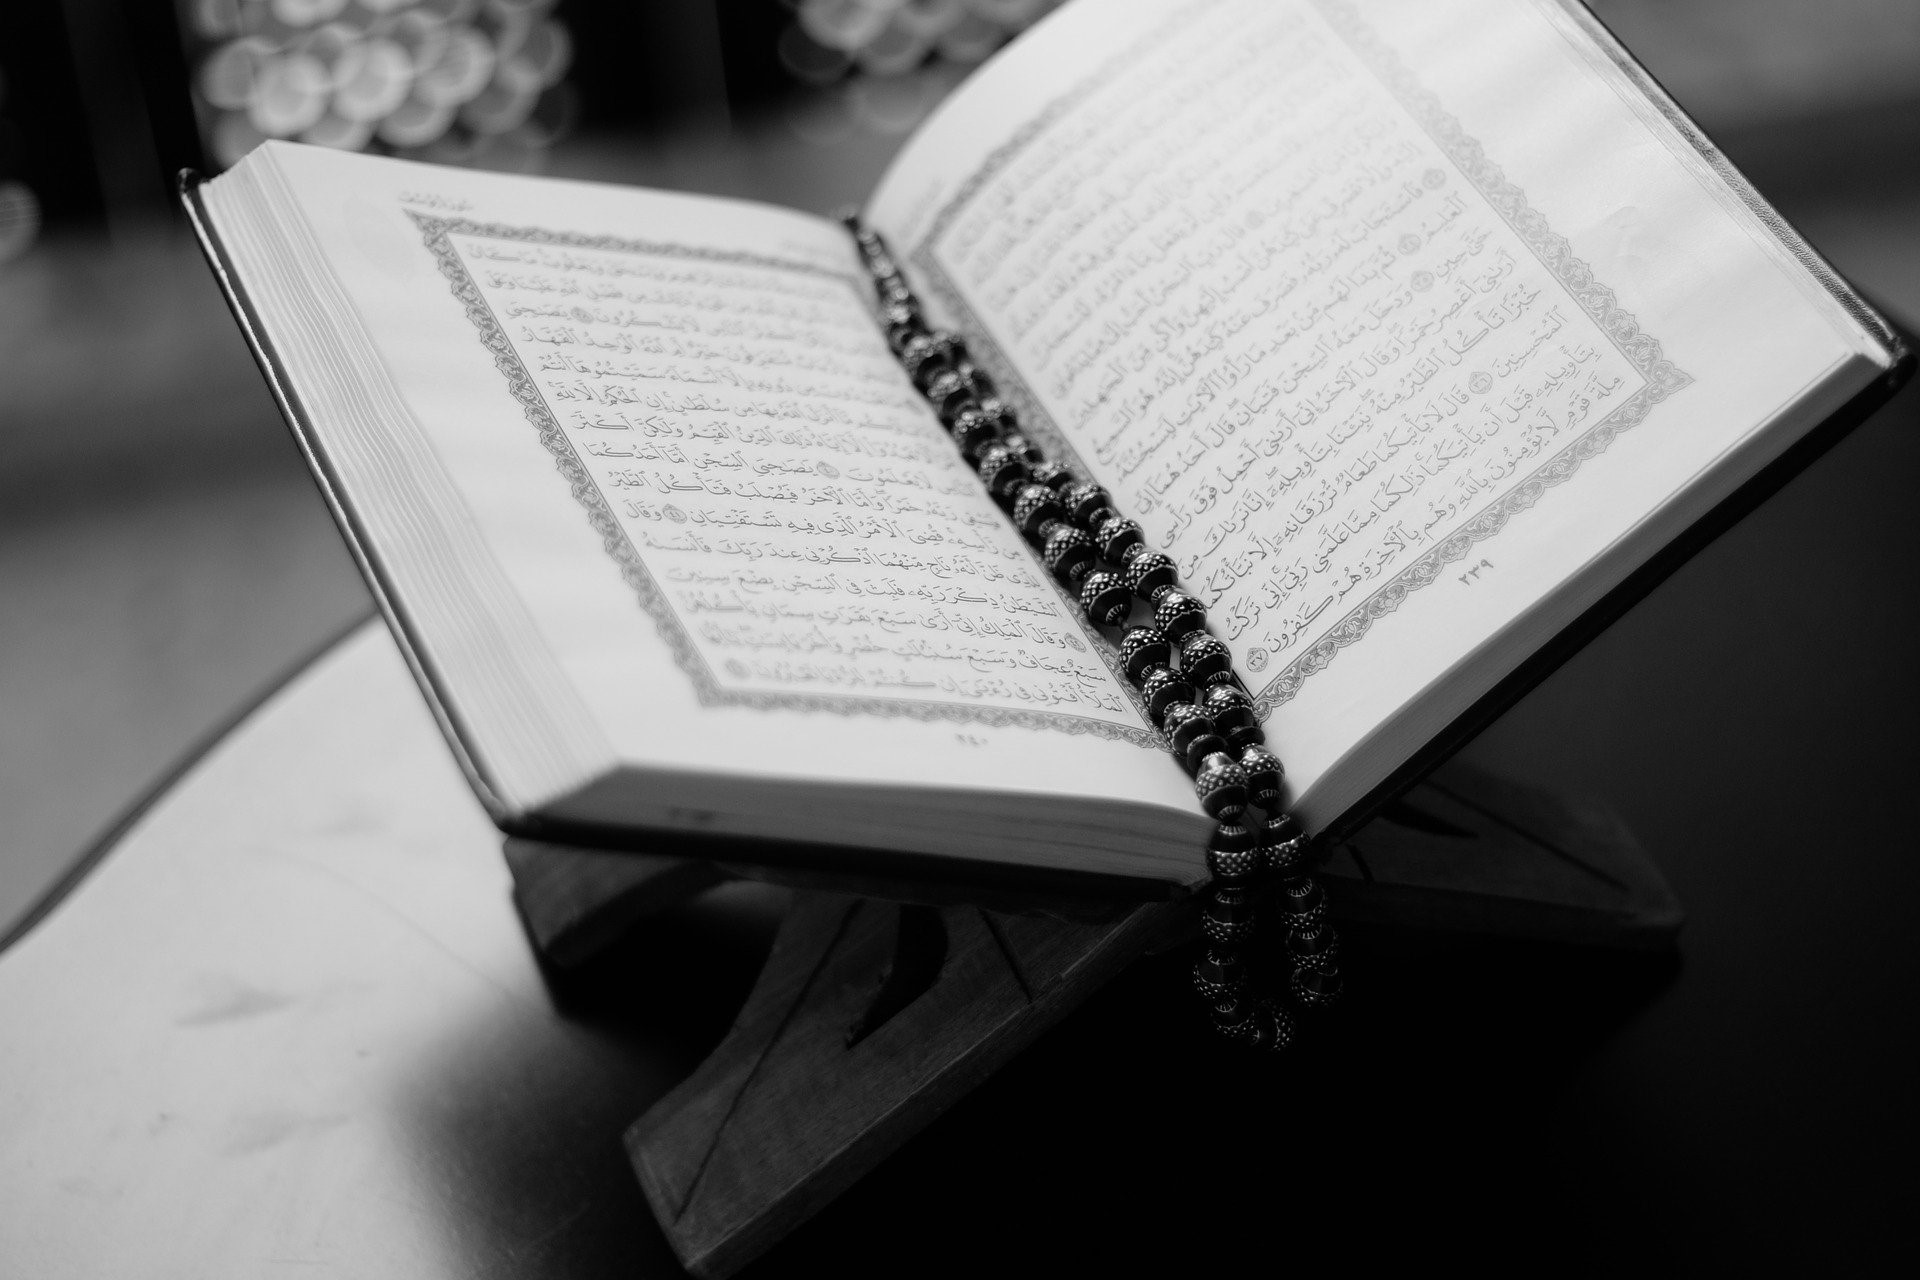 Quran And Rosary